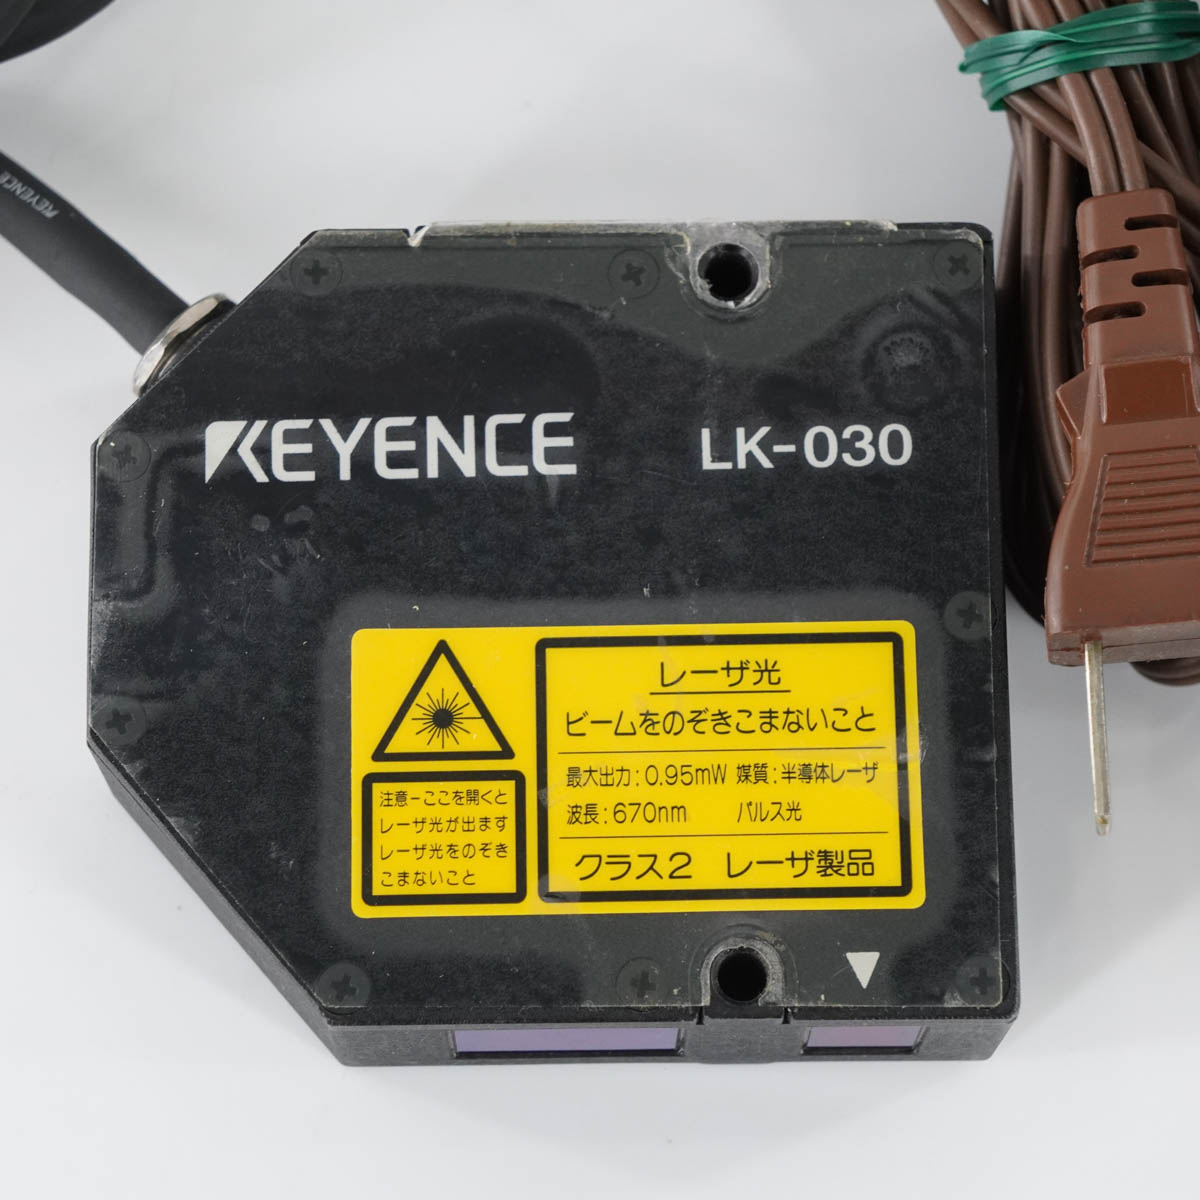 PG]USED 8日保証 セット KEYENCE LK-030 LK-2000 KZ-U3 RJ-800